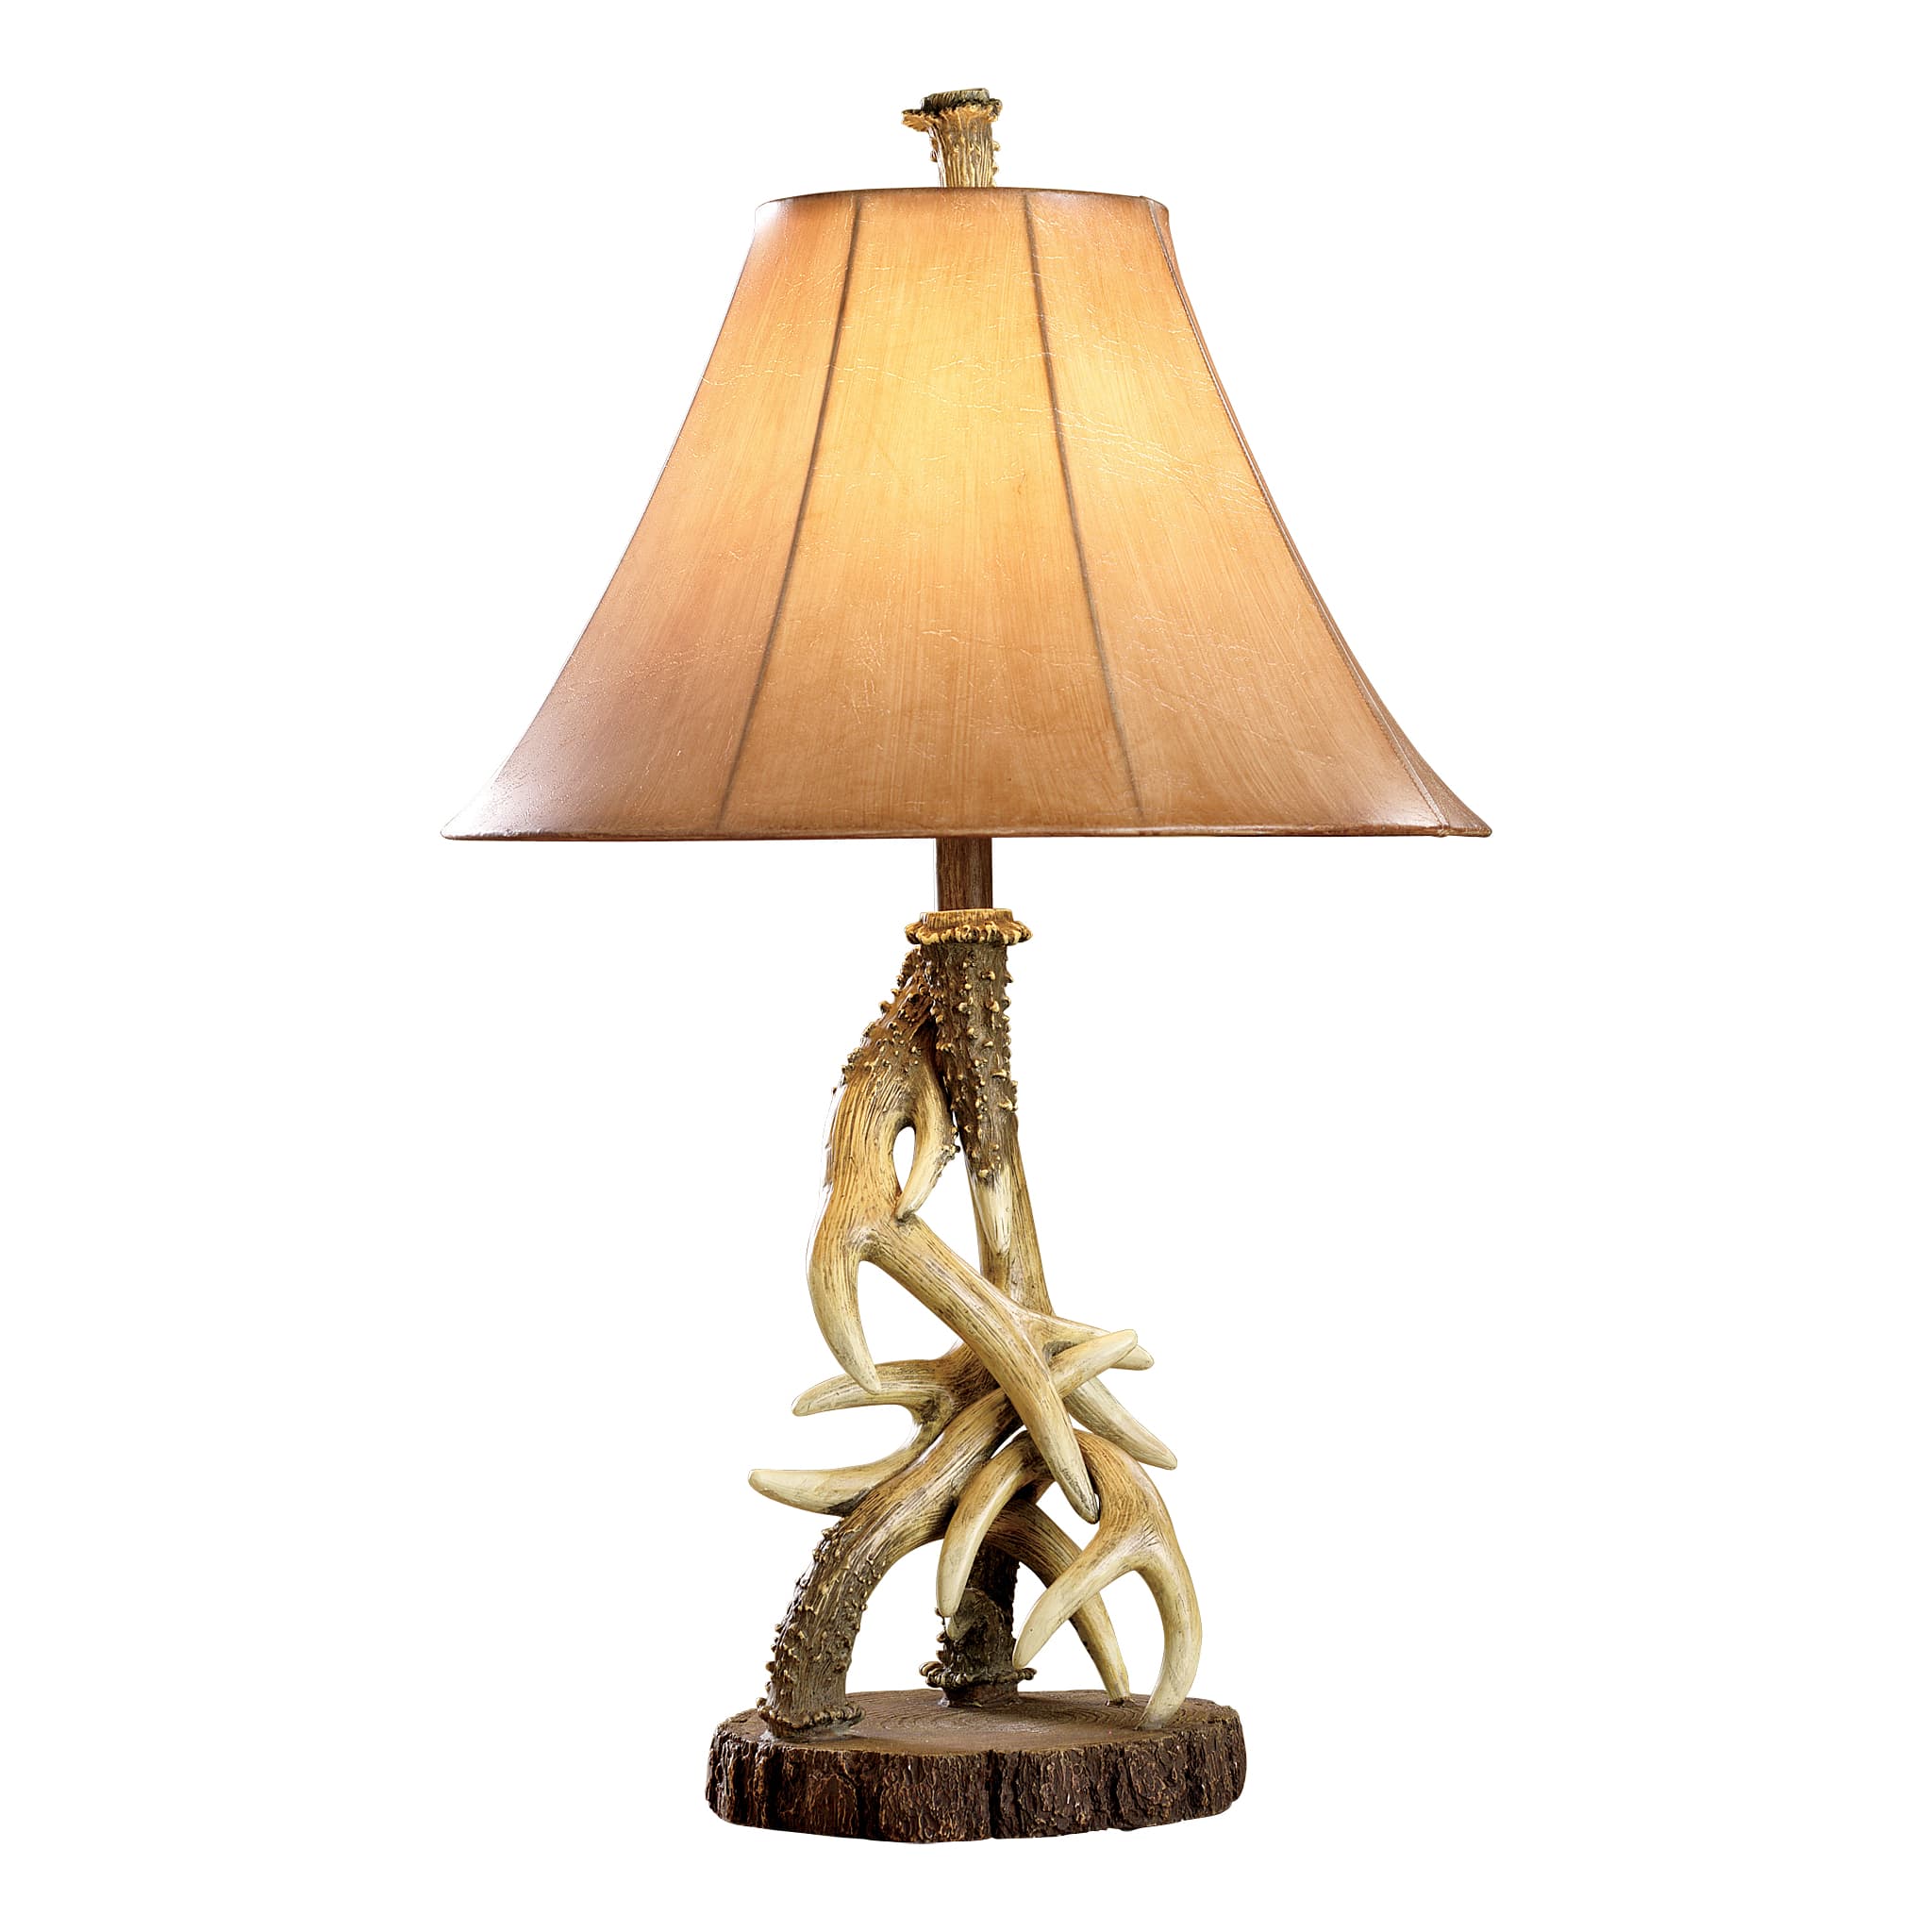 Fly Reel Table Lamp, Fishing Lamp, Fish Lamp, Rustic Decorative